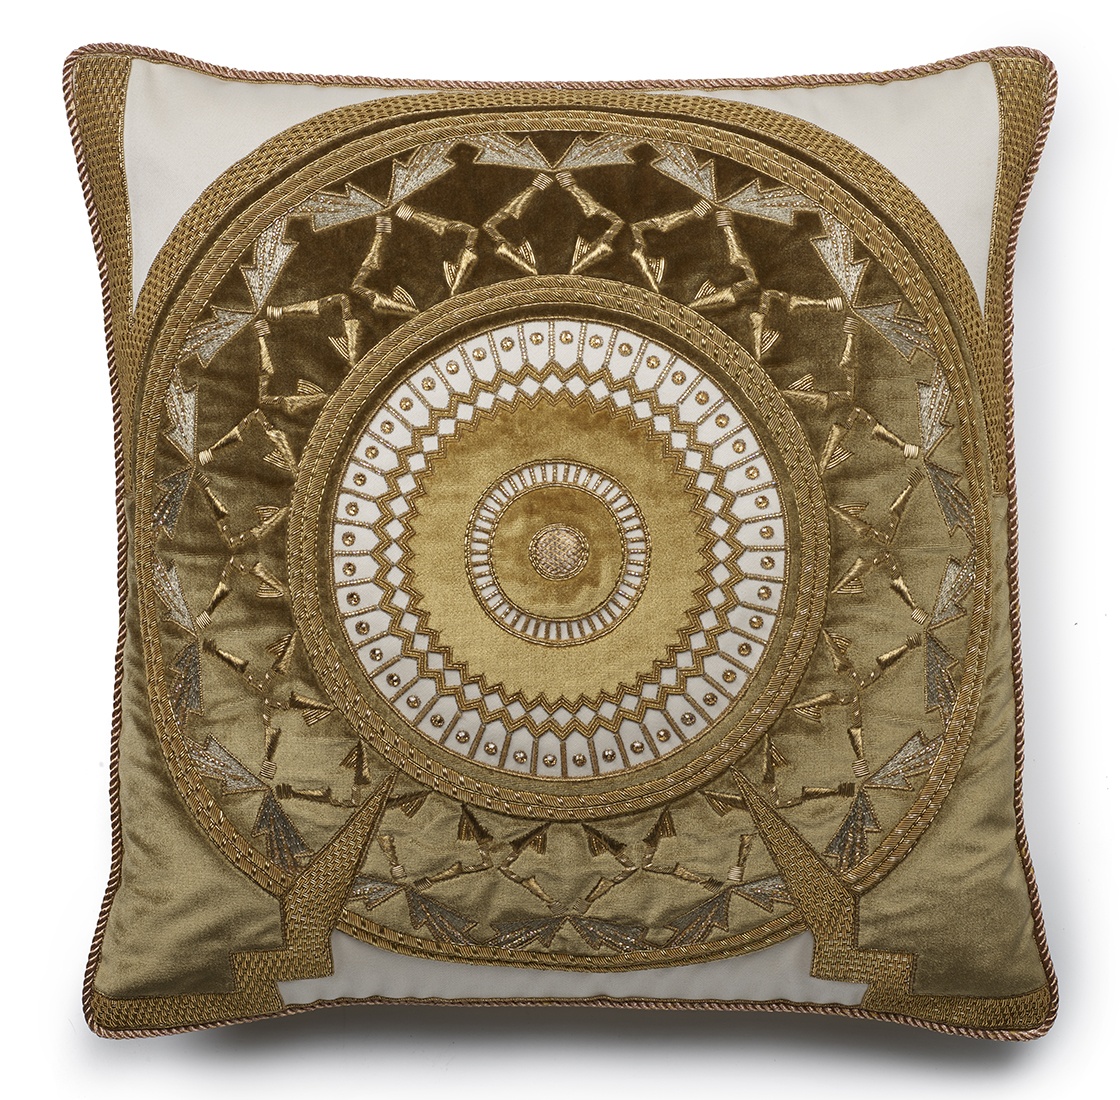 Ettore cushion in Capri silk velvet - French grey, Almond - Beaumont & Fletcher